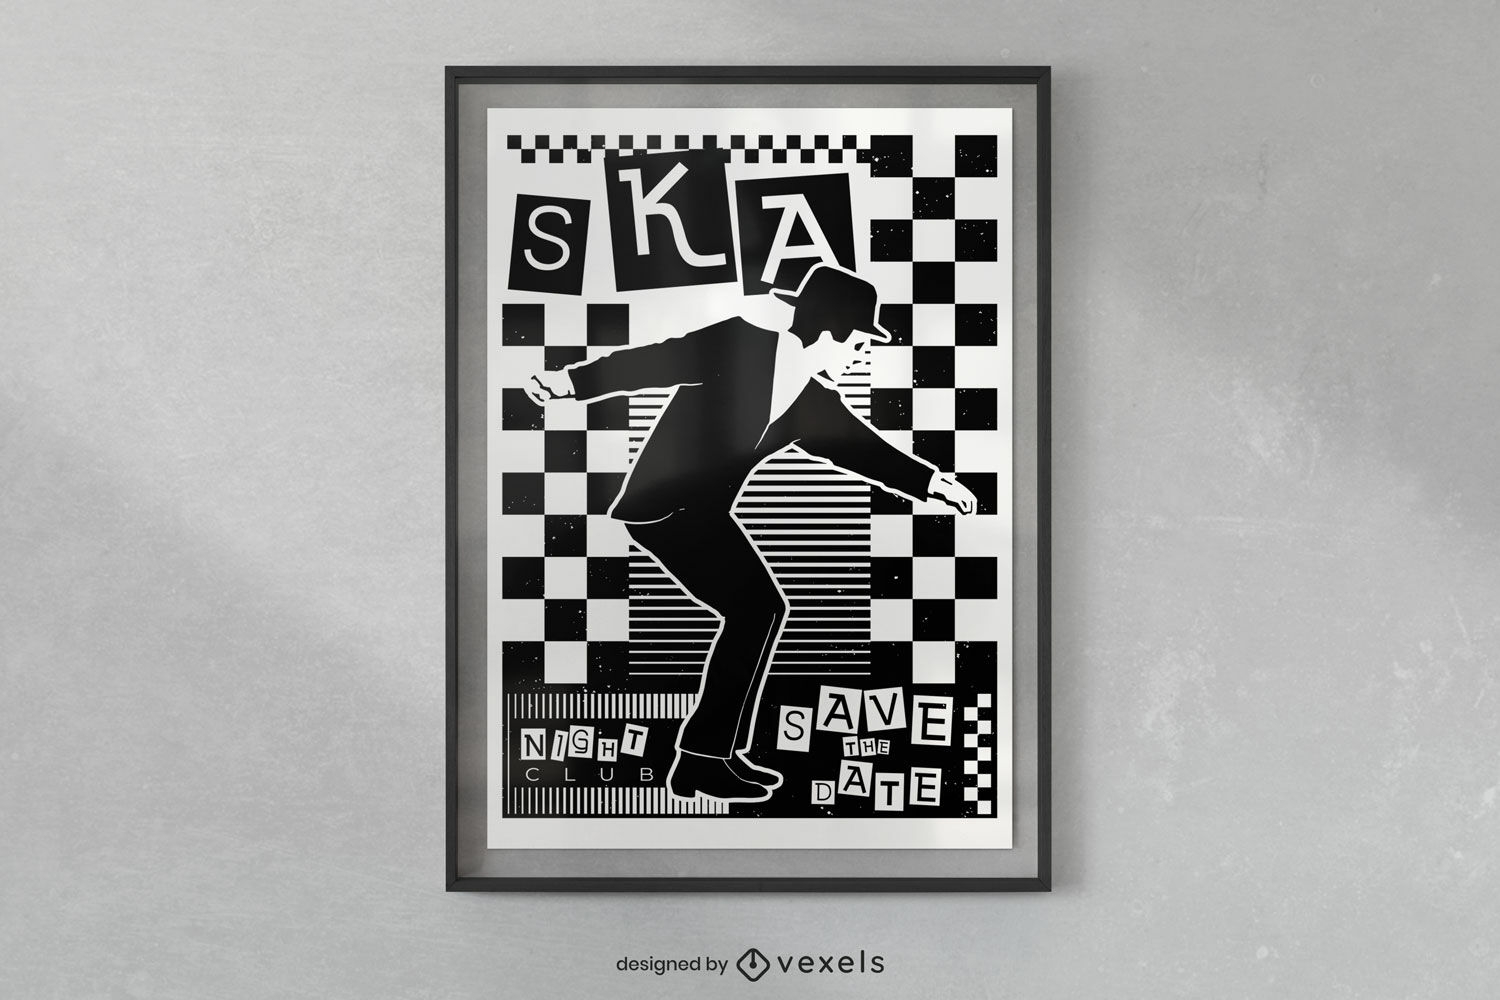 Mann tanzt im schwarz-wei?en Plakatdesign